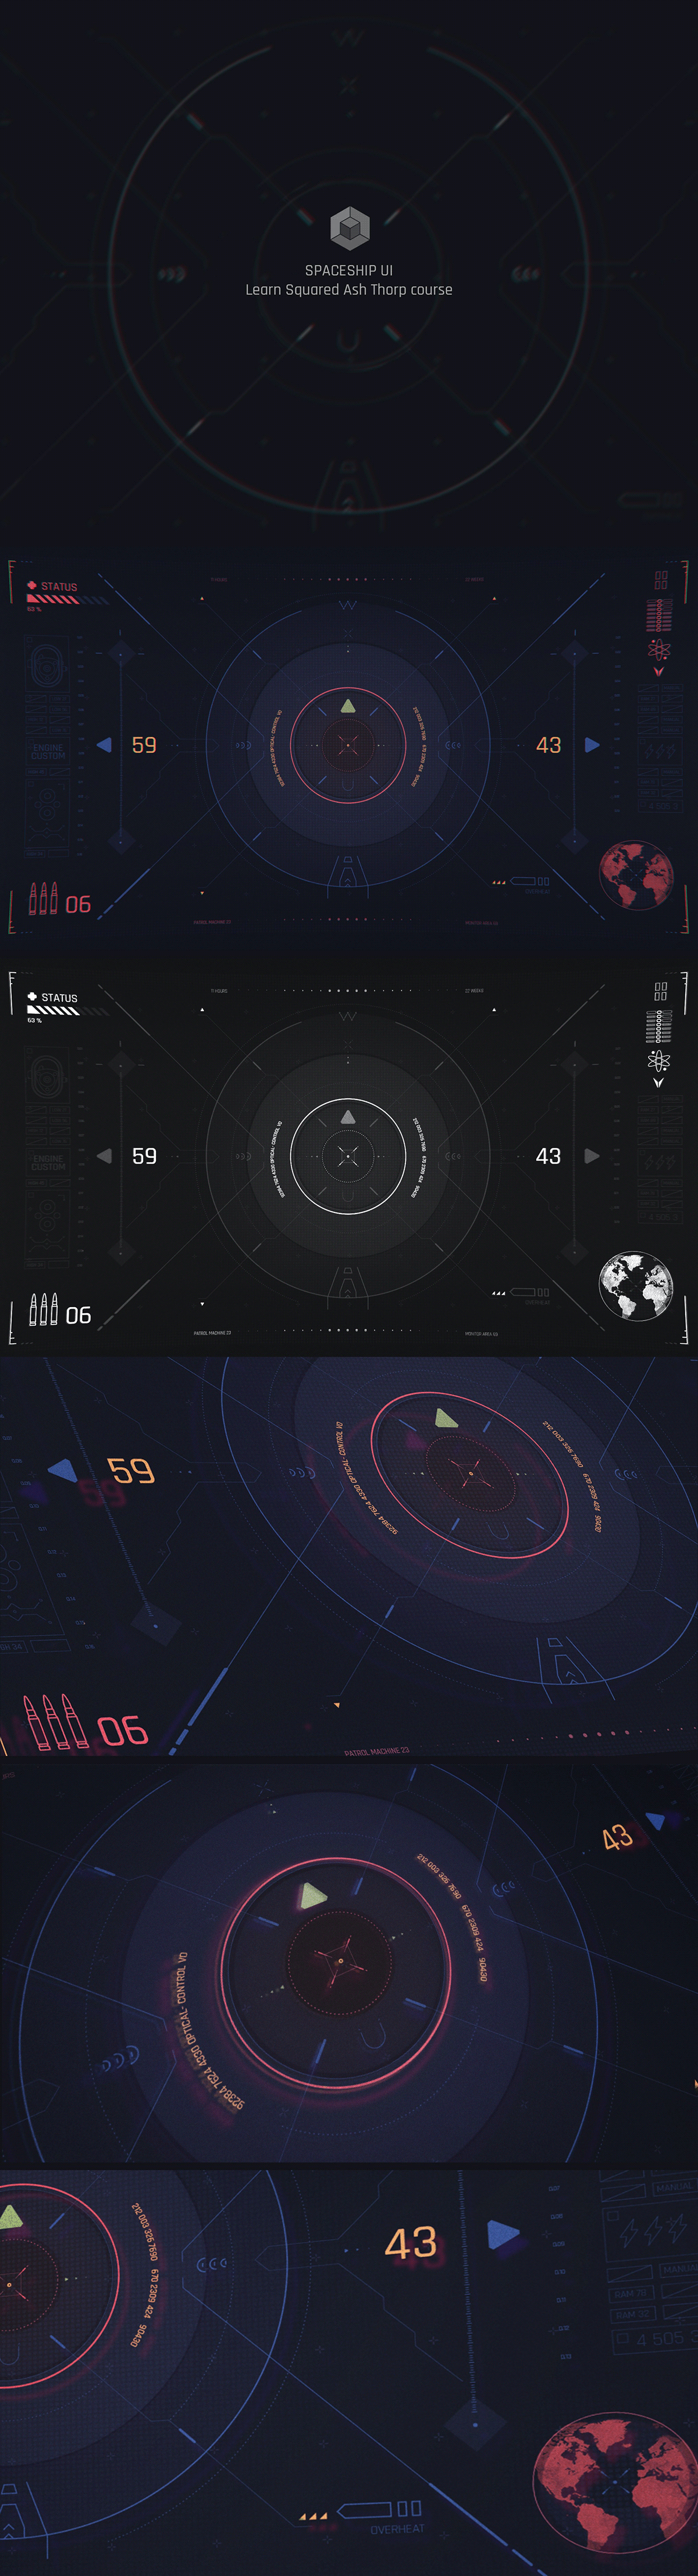 ash thorp crosshair game ui HUD leran squared space ship typography   UI Cyberpunk cyberpunk ui